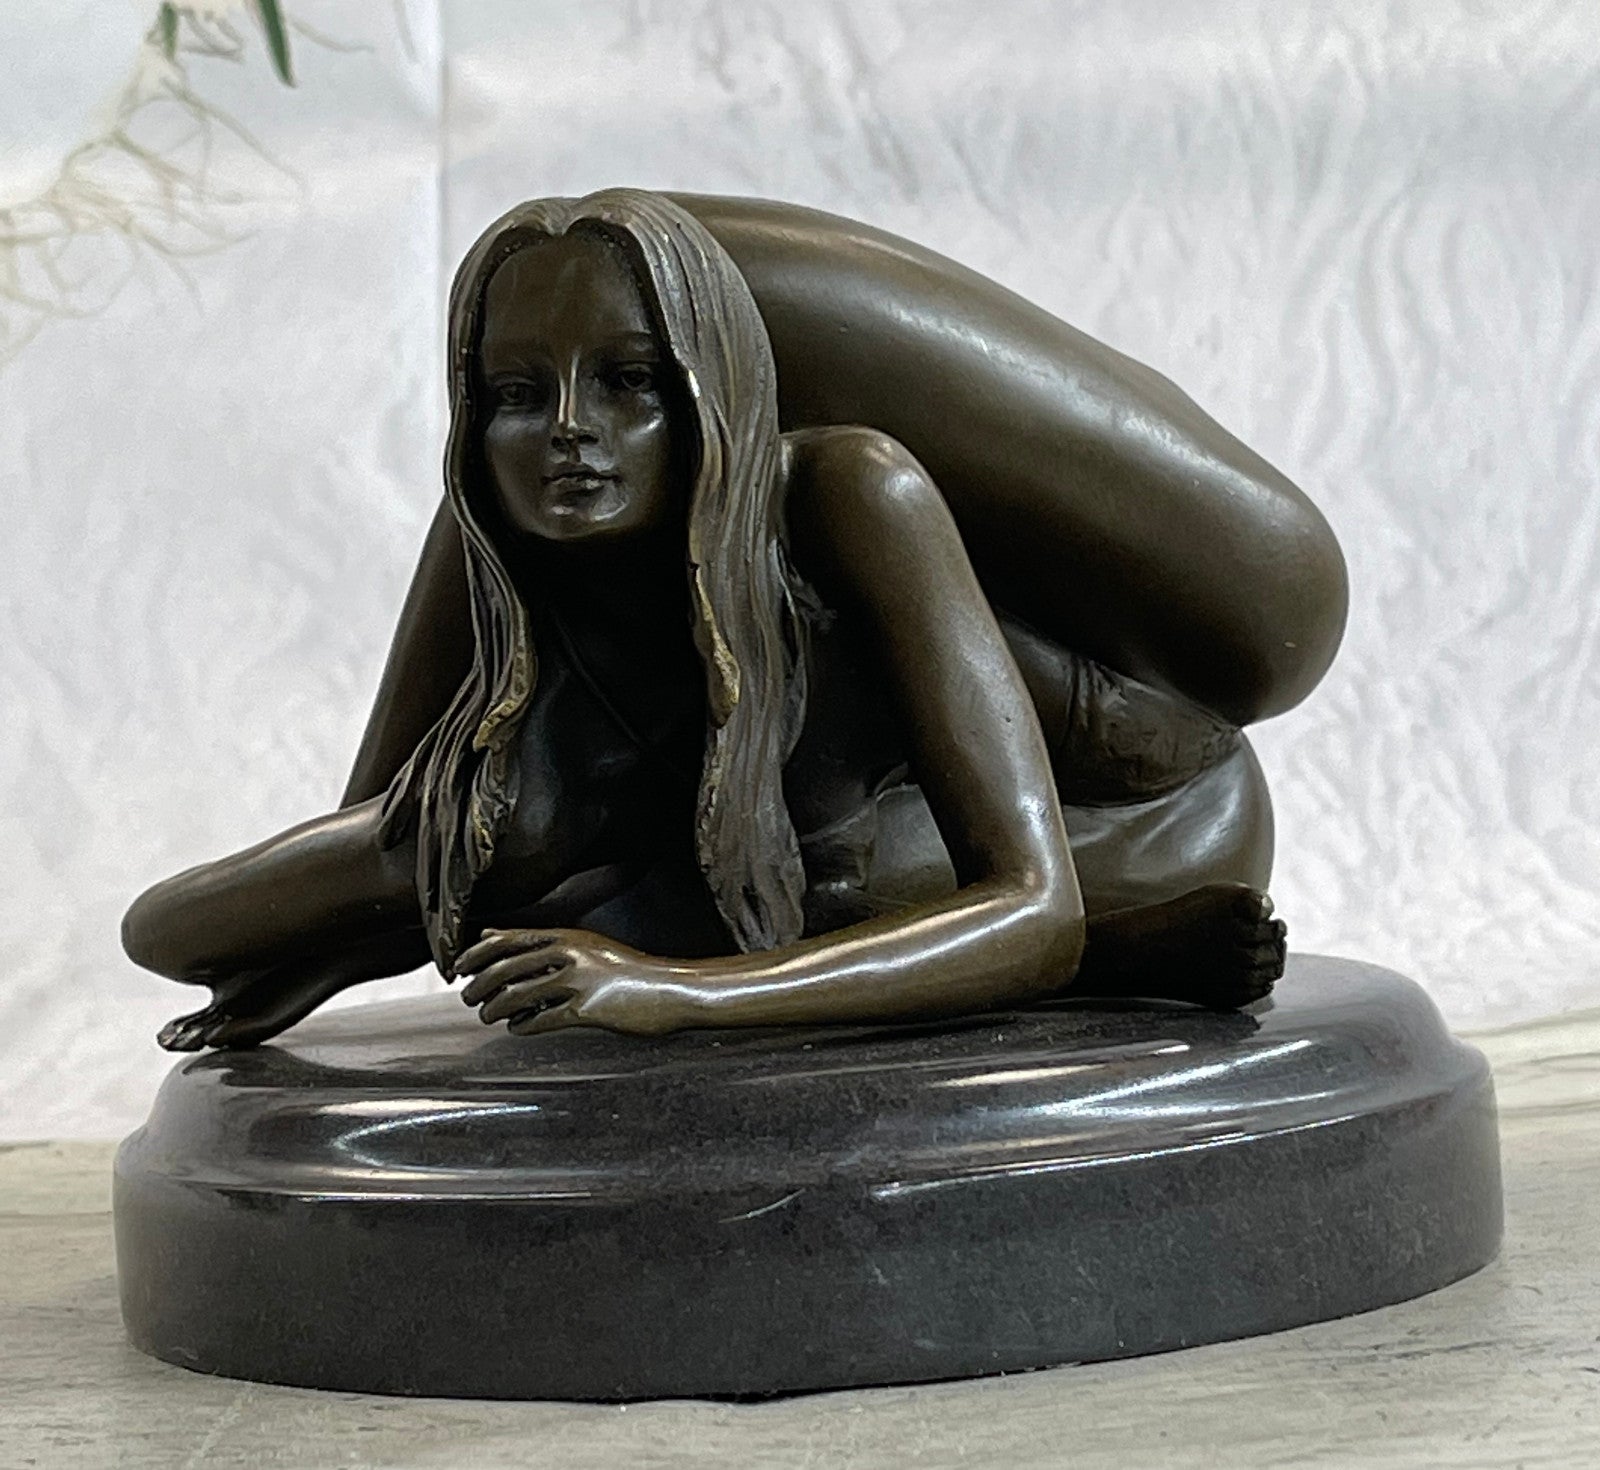 Handcrafted bronze sculpture SALE Deco Art Female Girl Nude Hand Made Decor